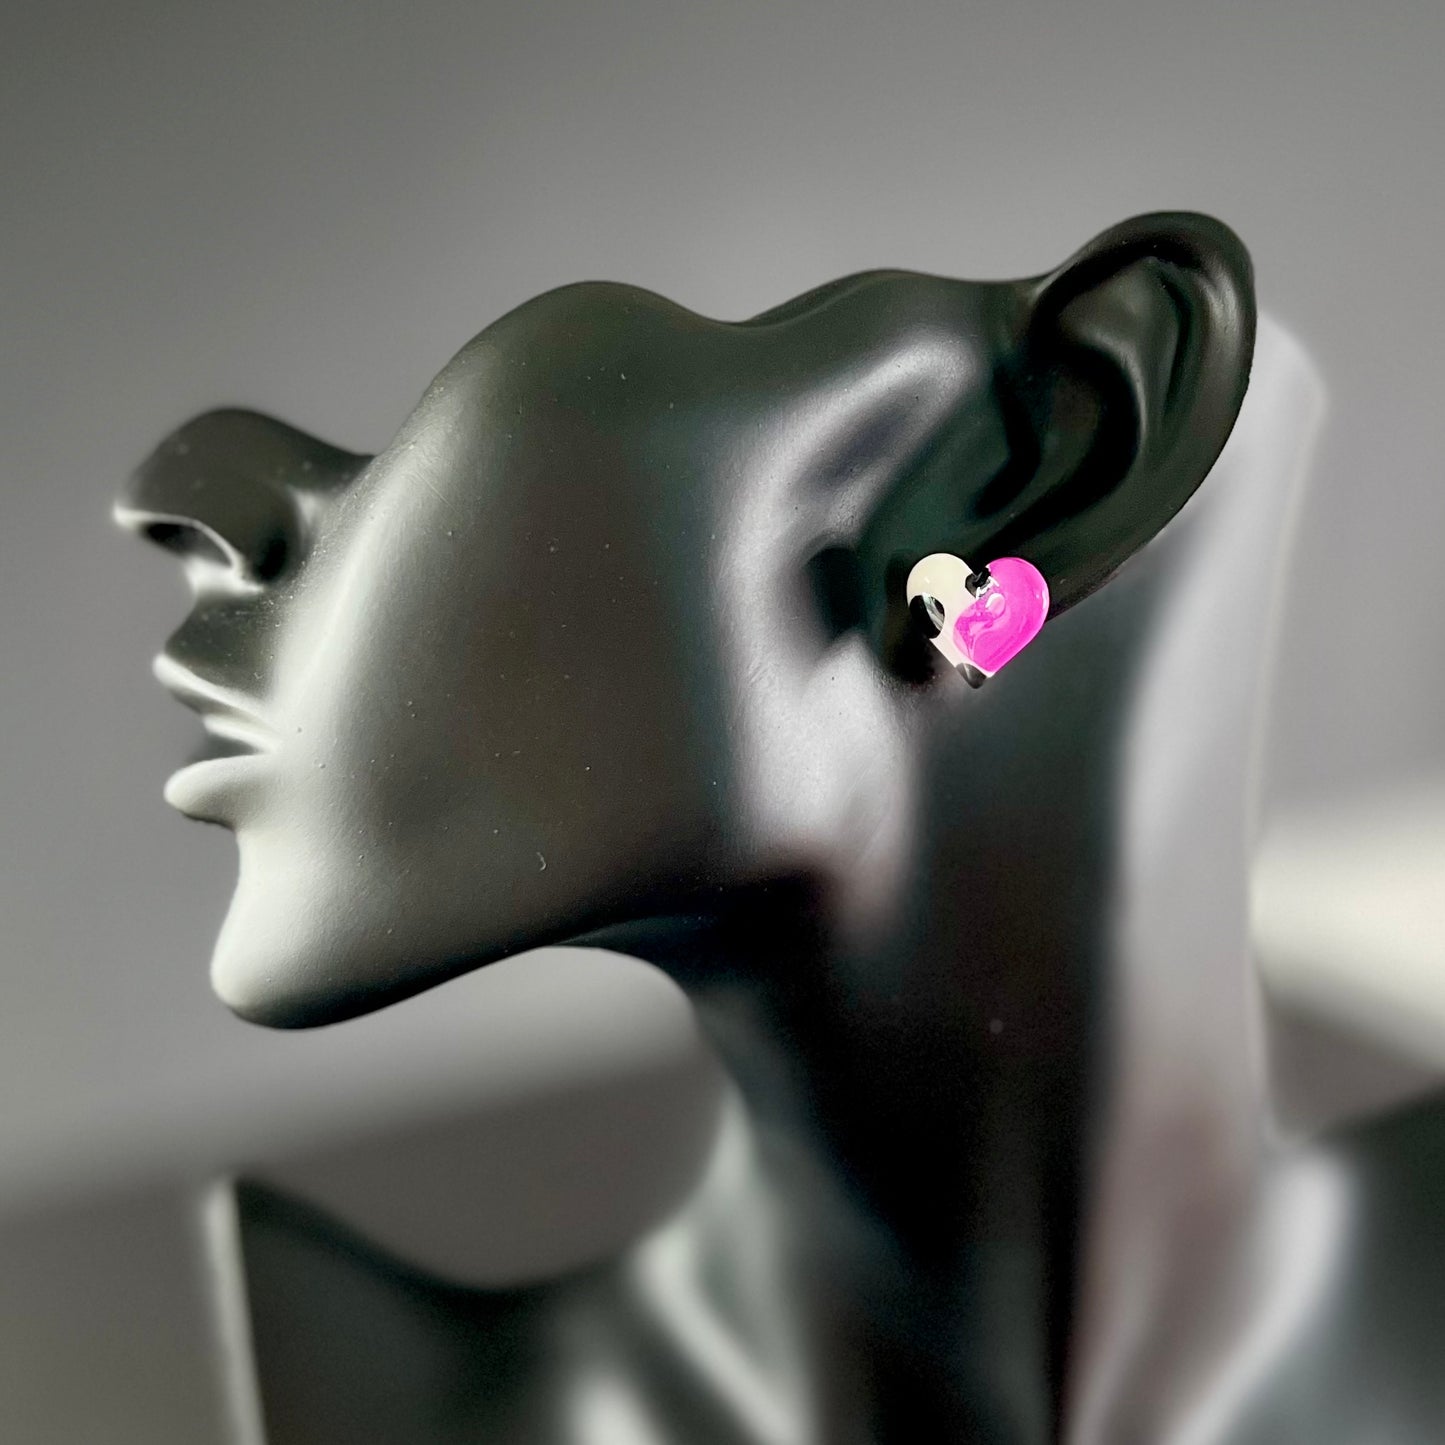 Small heart studs, pink, black & white spots, handmade earrings